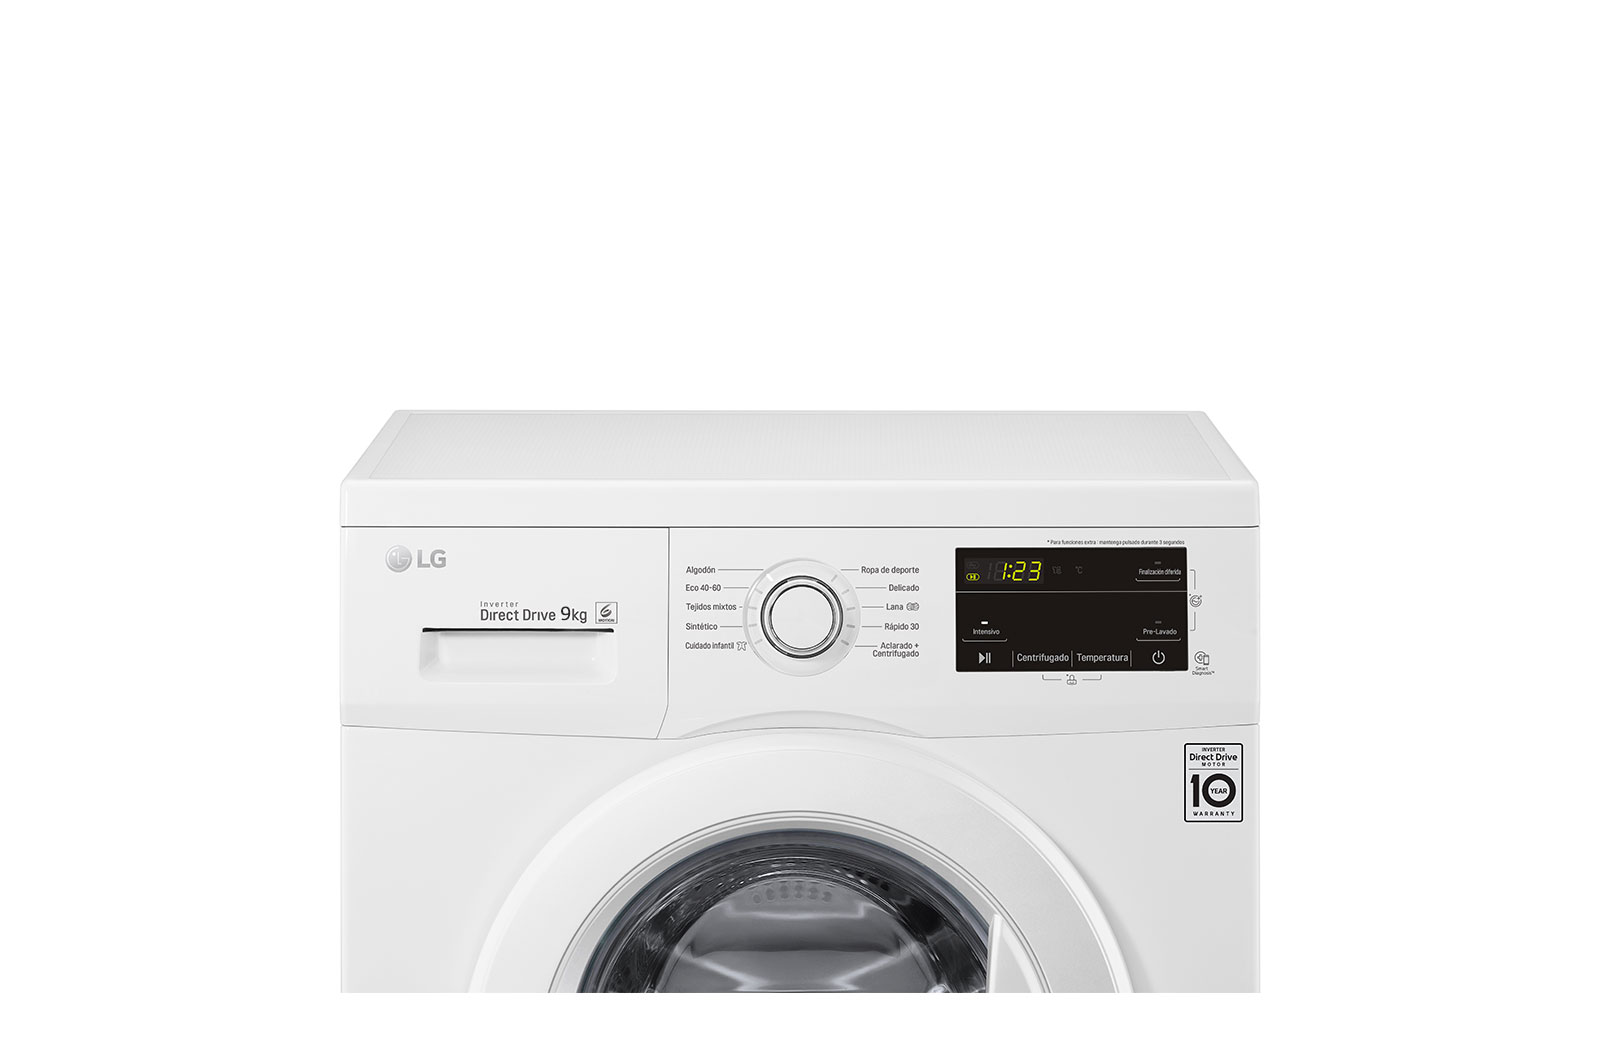 Manual de lavadora LG Inverter Direct Drive: FV1409H3V Guía del